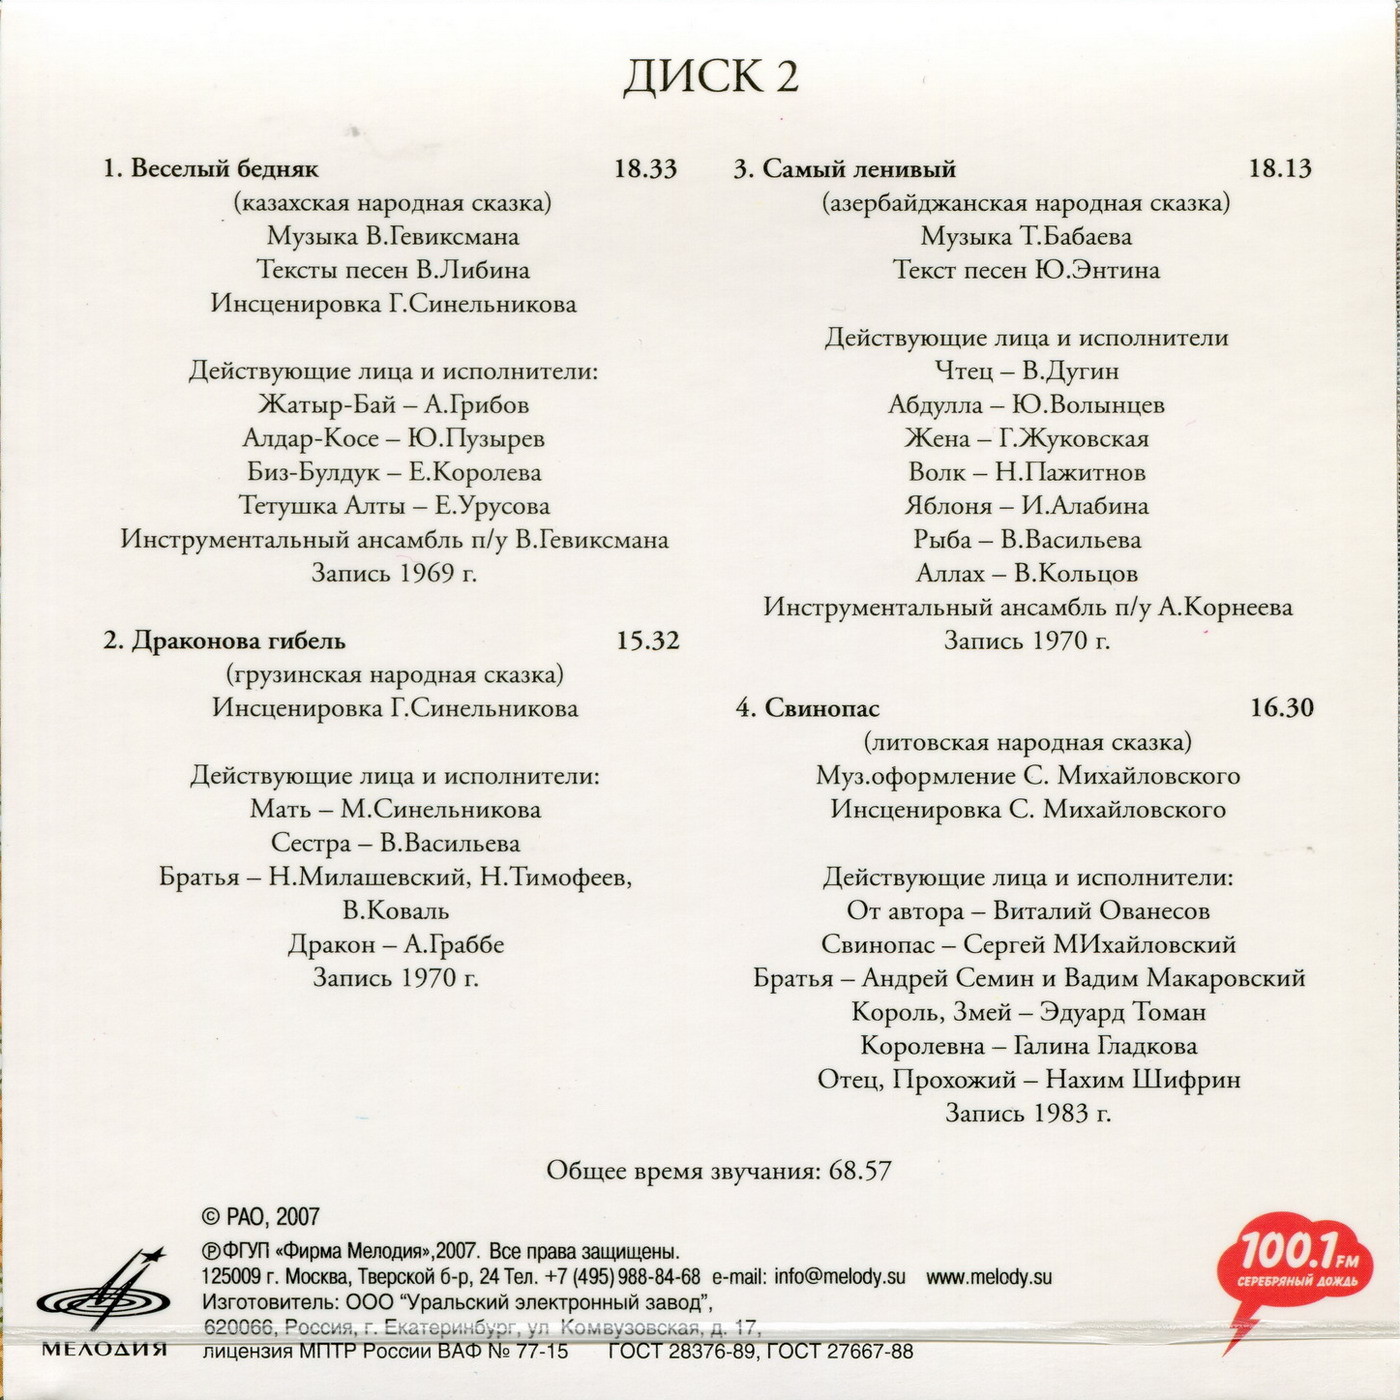 Сказки народов СССР (4 CD)